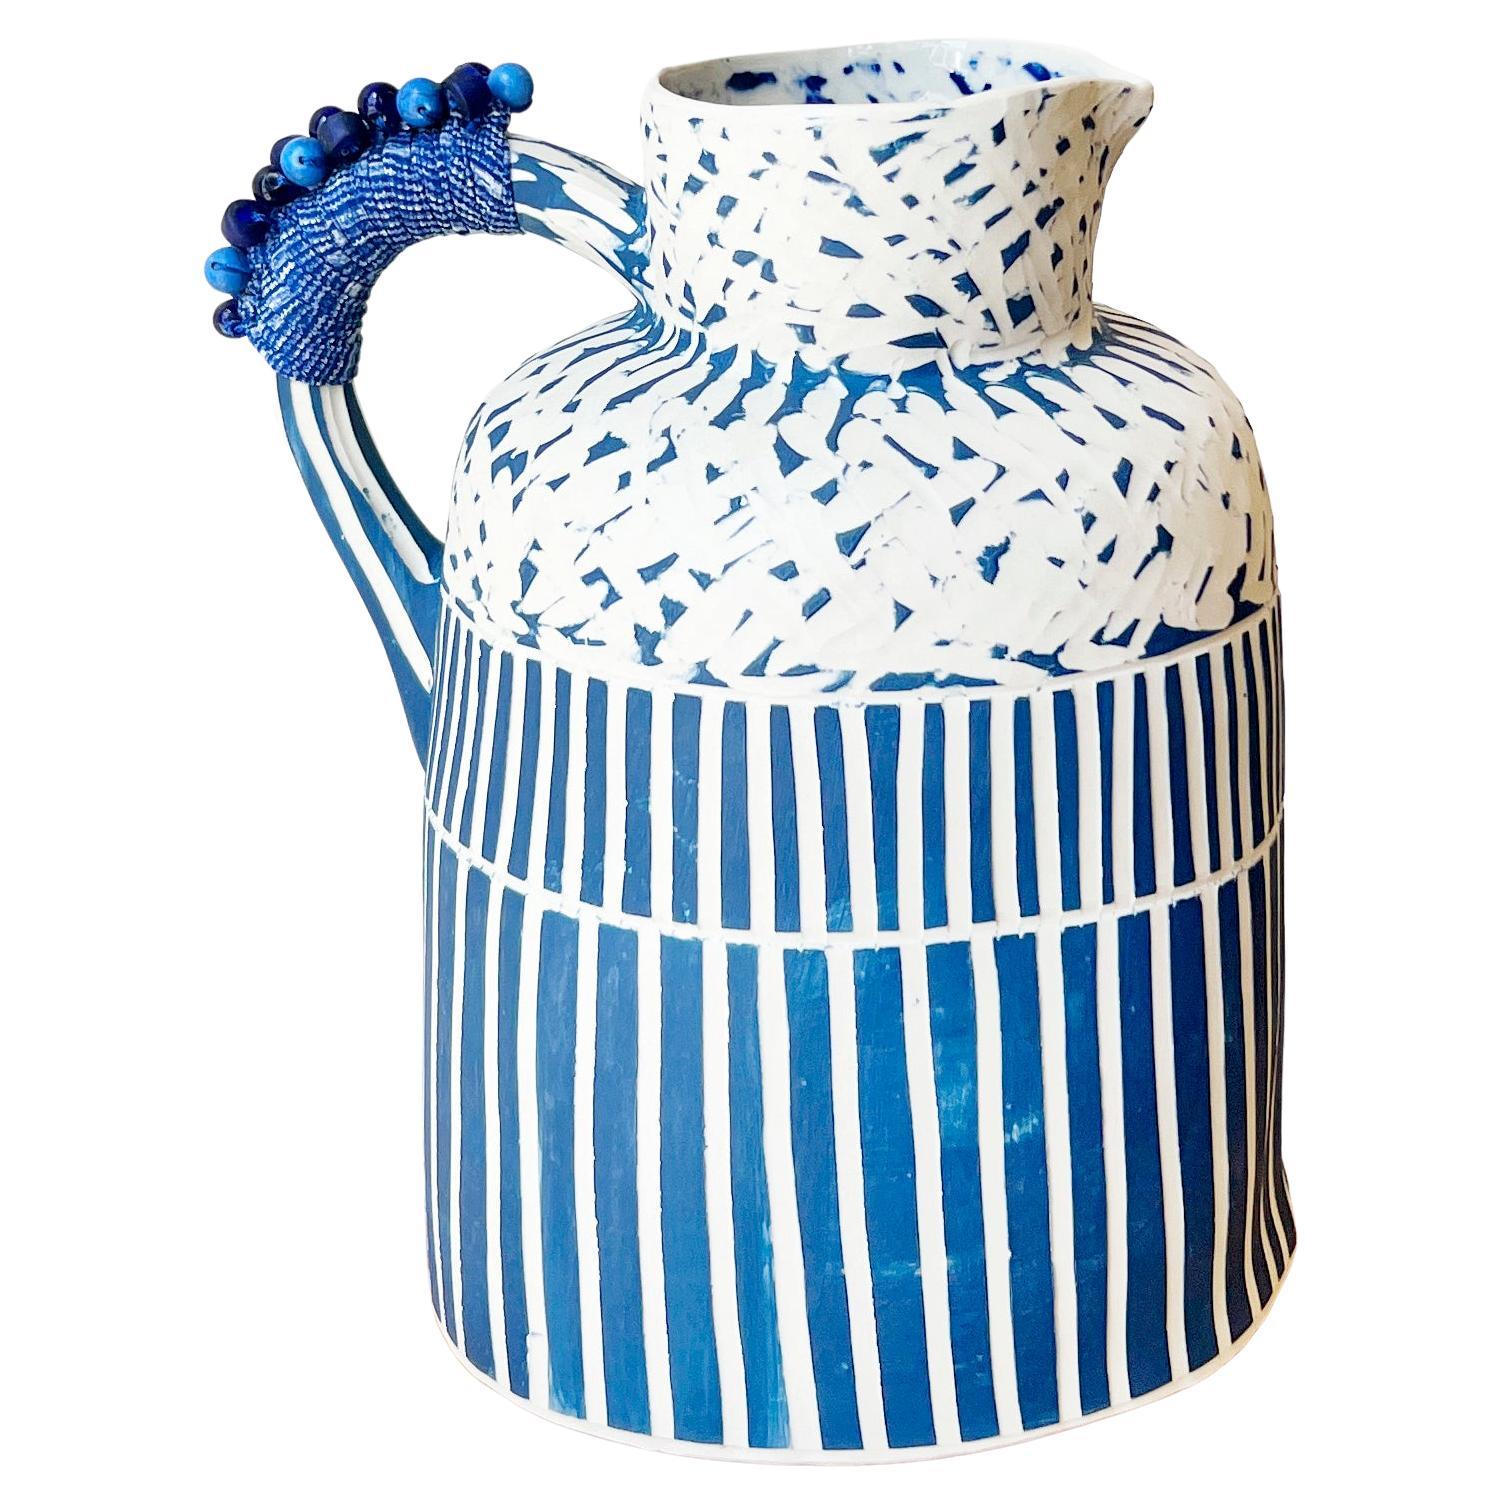 Tiled Handmade Whimsical Ceramic Jug in White and Blue Stripes w/ Beads